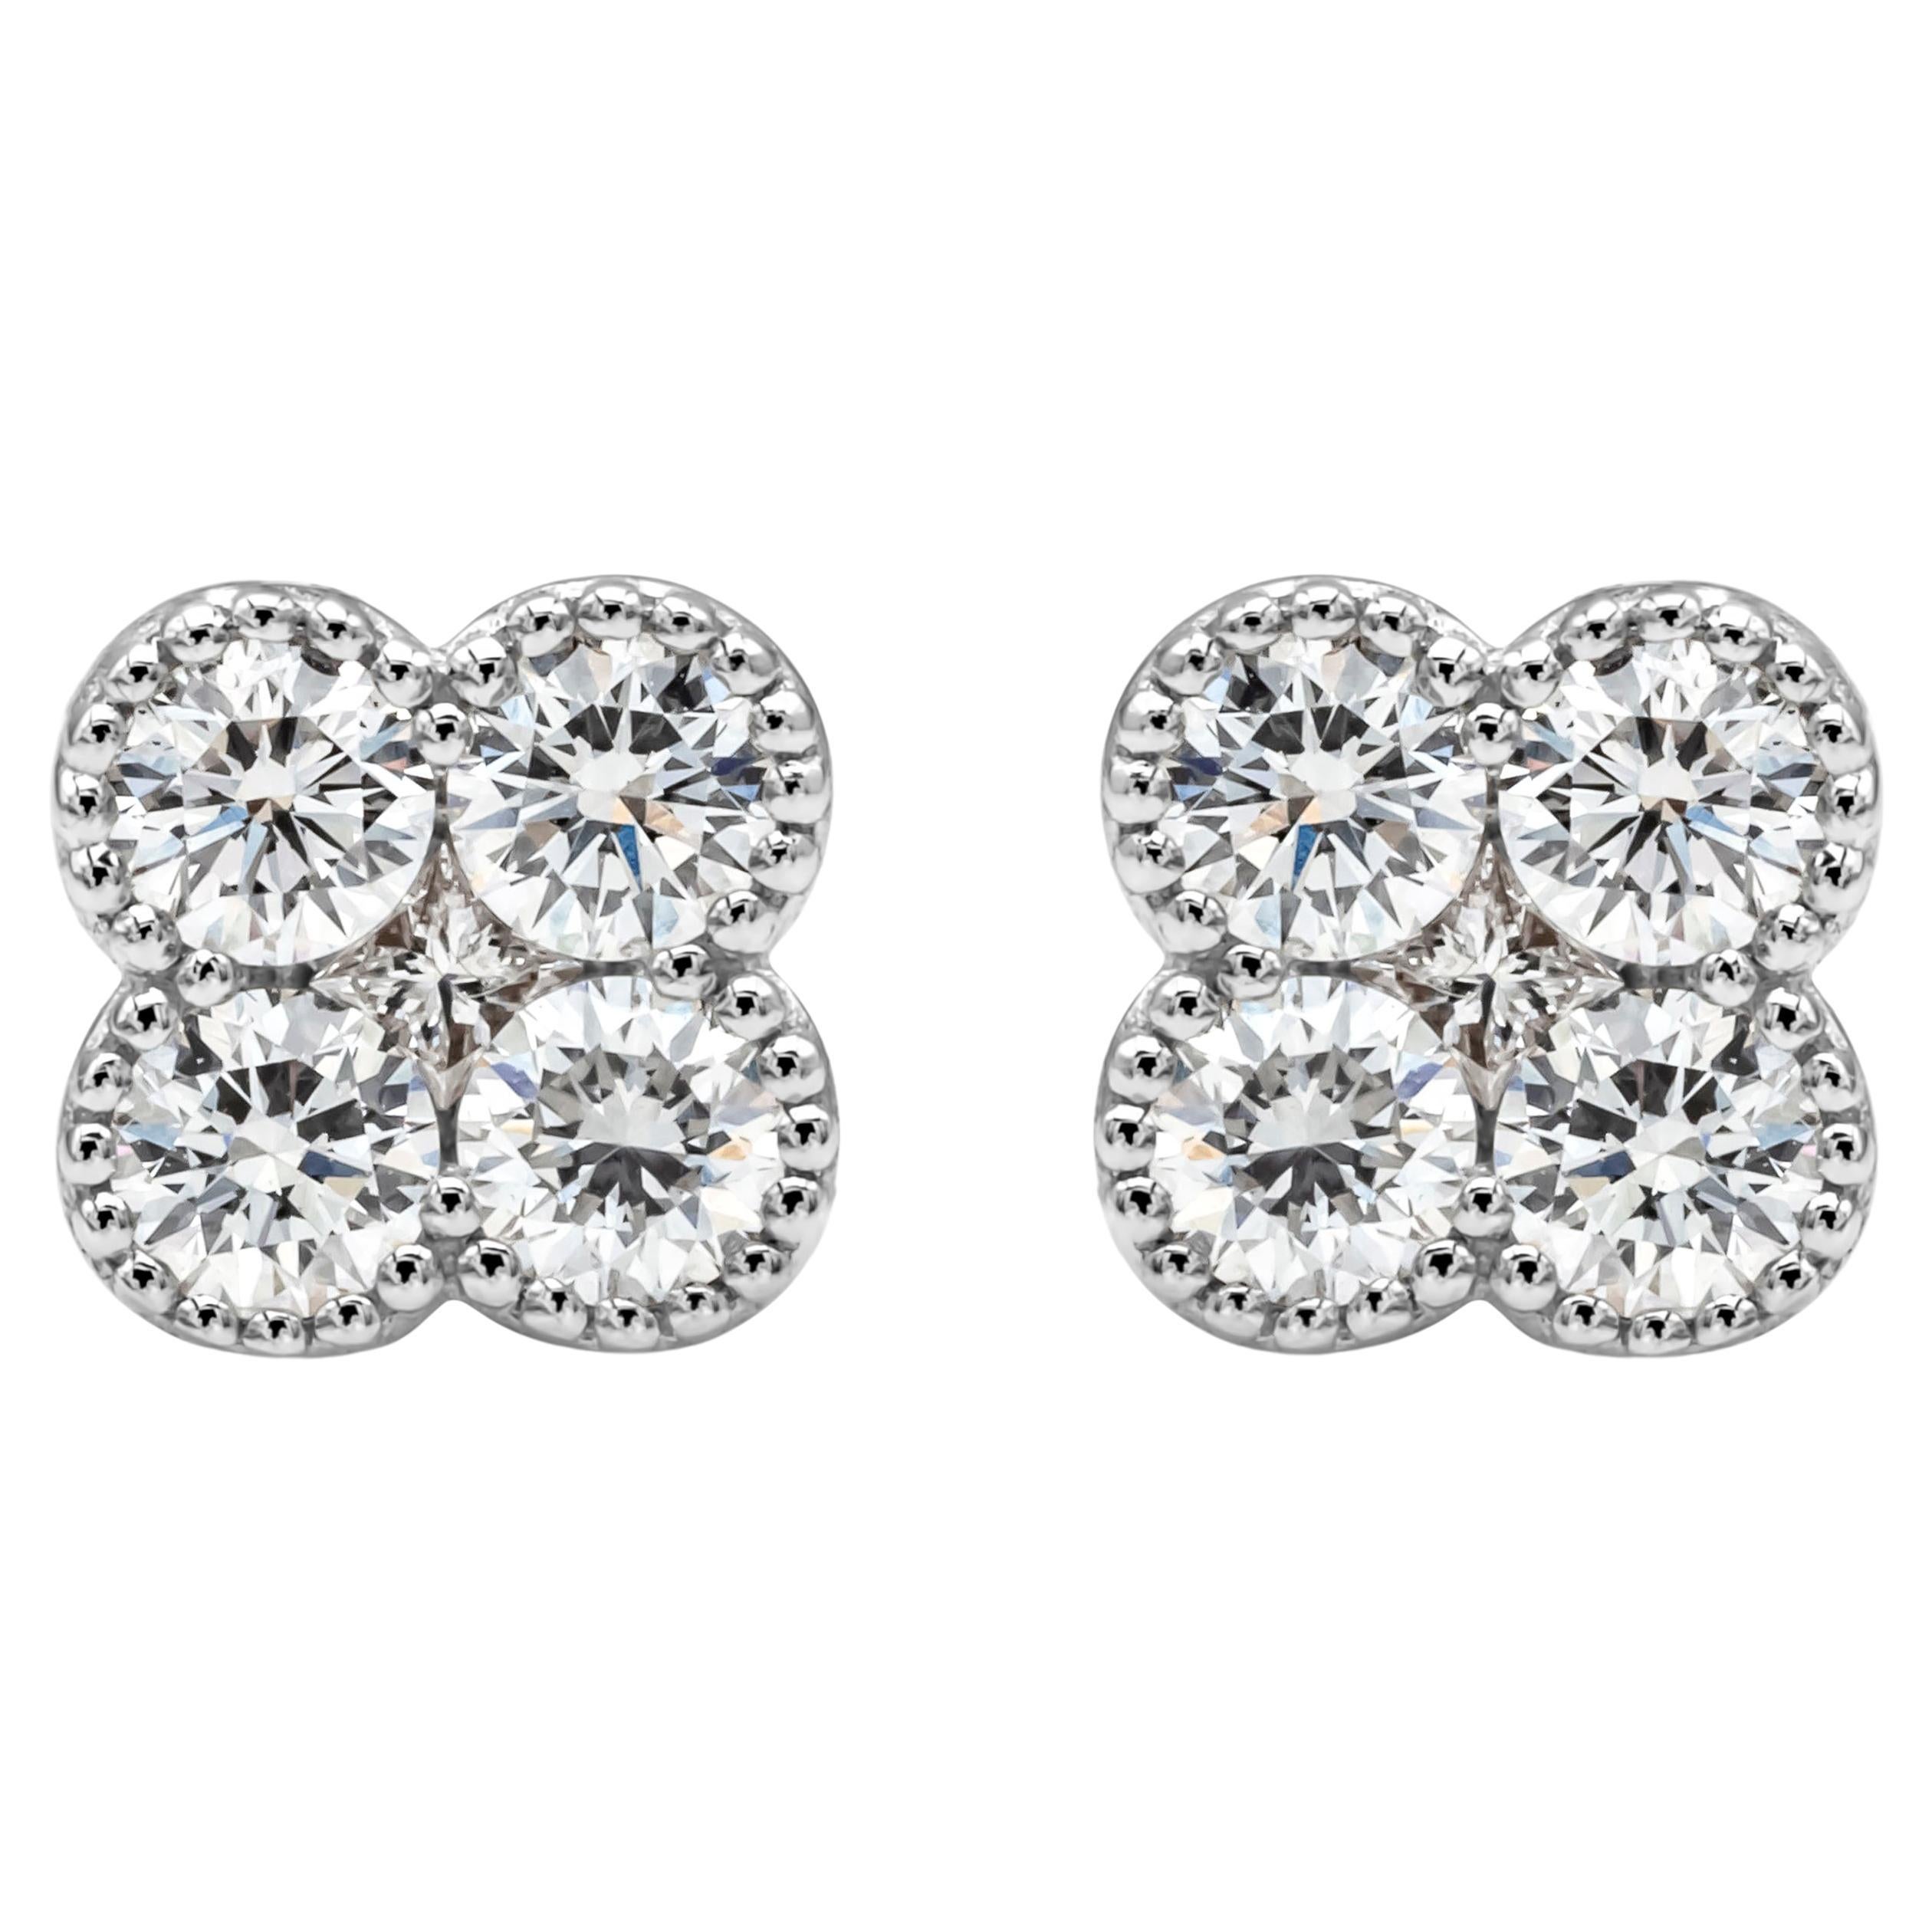 Roman Malakov 0.75 Carats Total Brilliant Round Cut Diamond Clover Stud Earrings For Sale